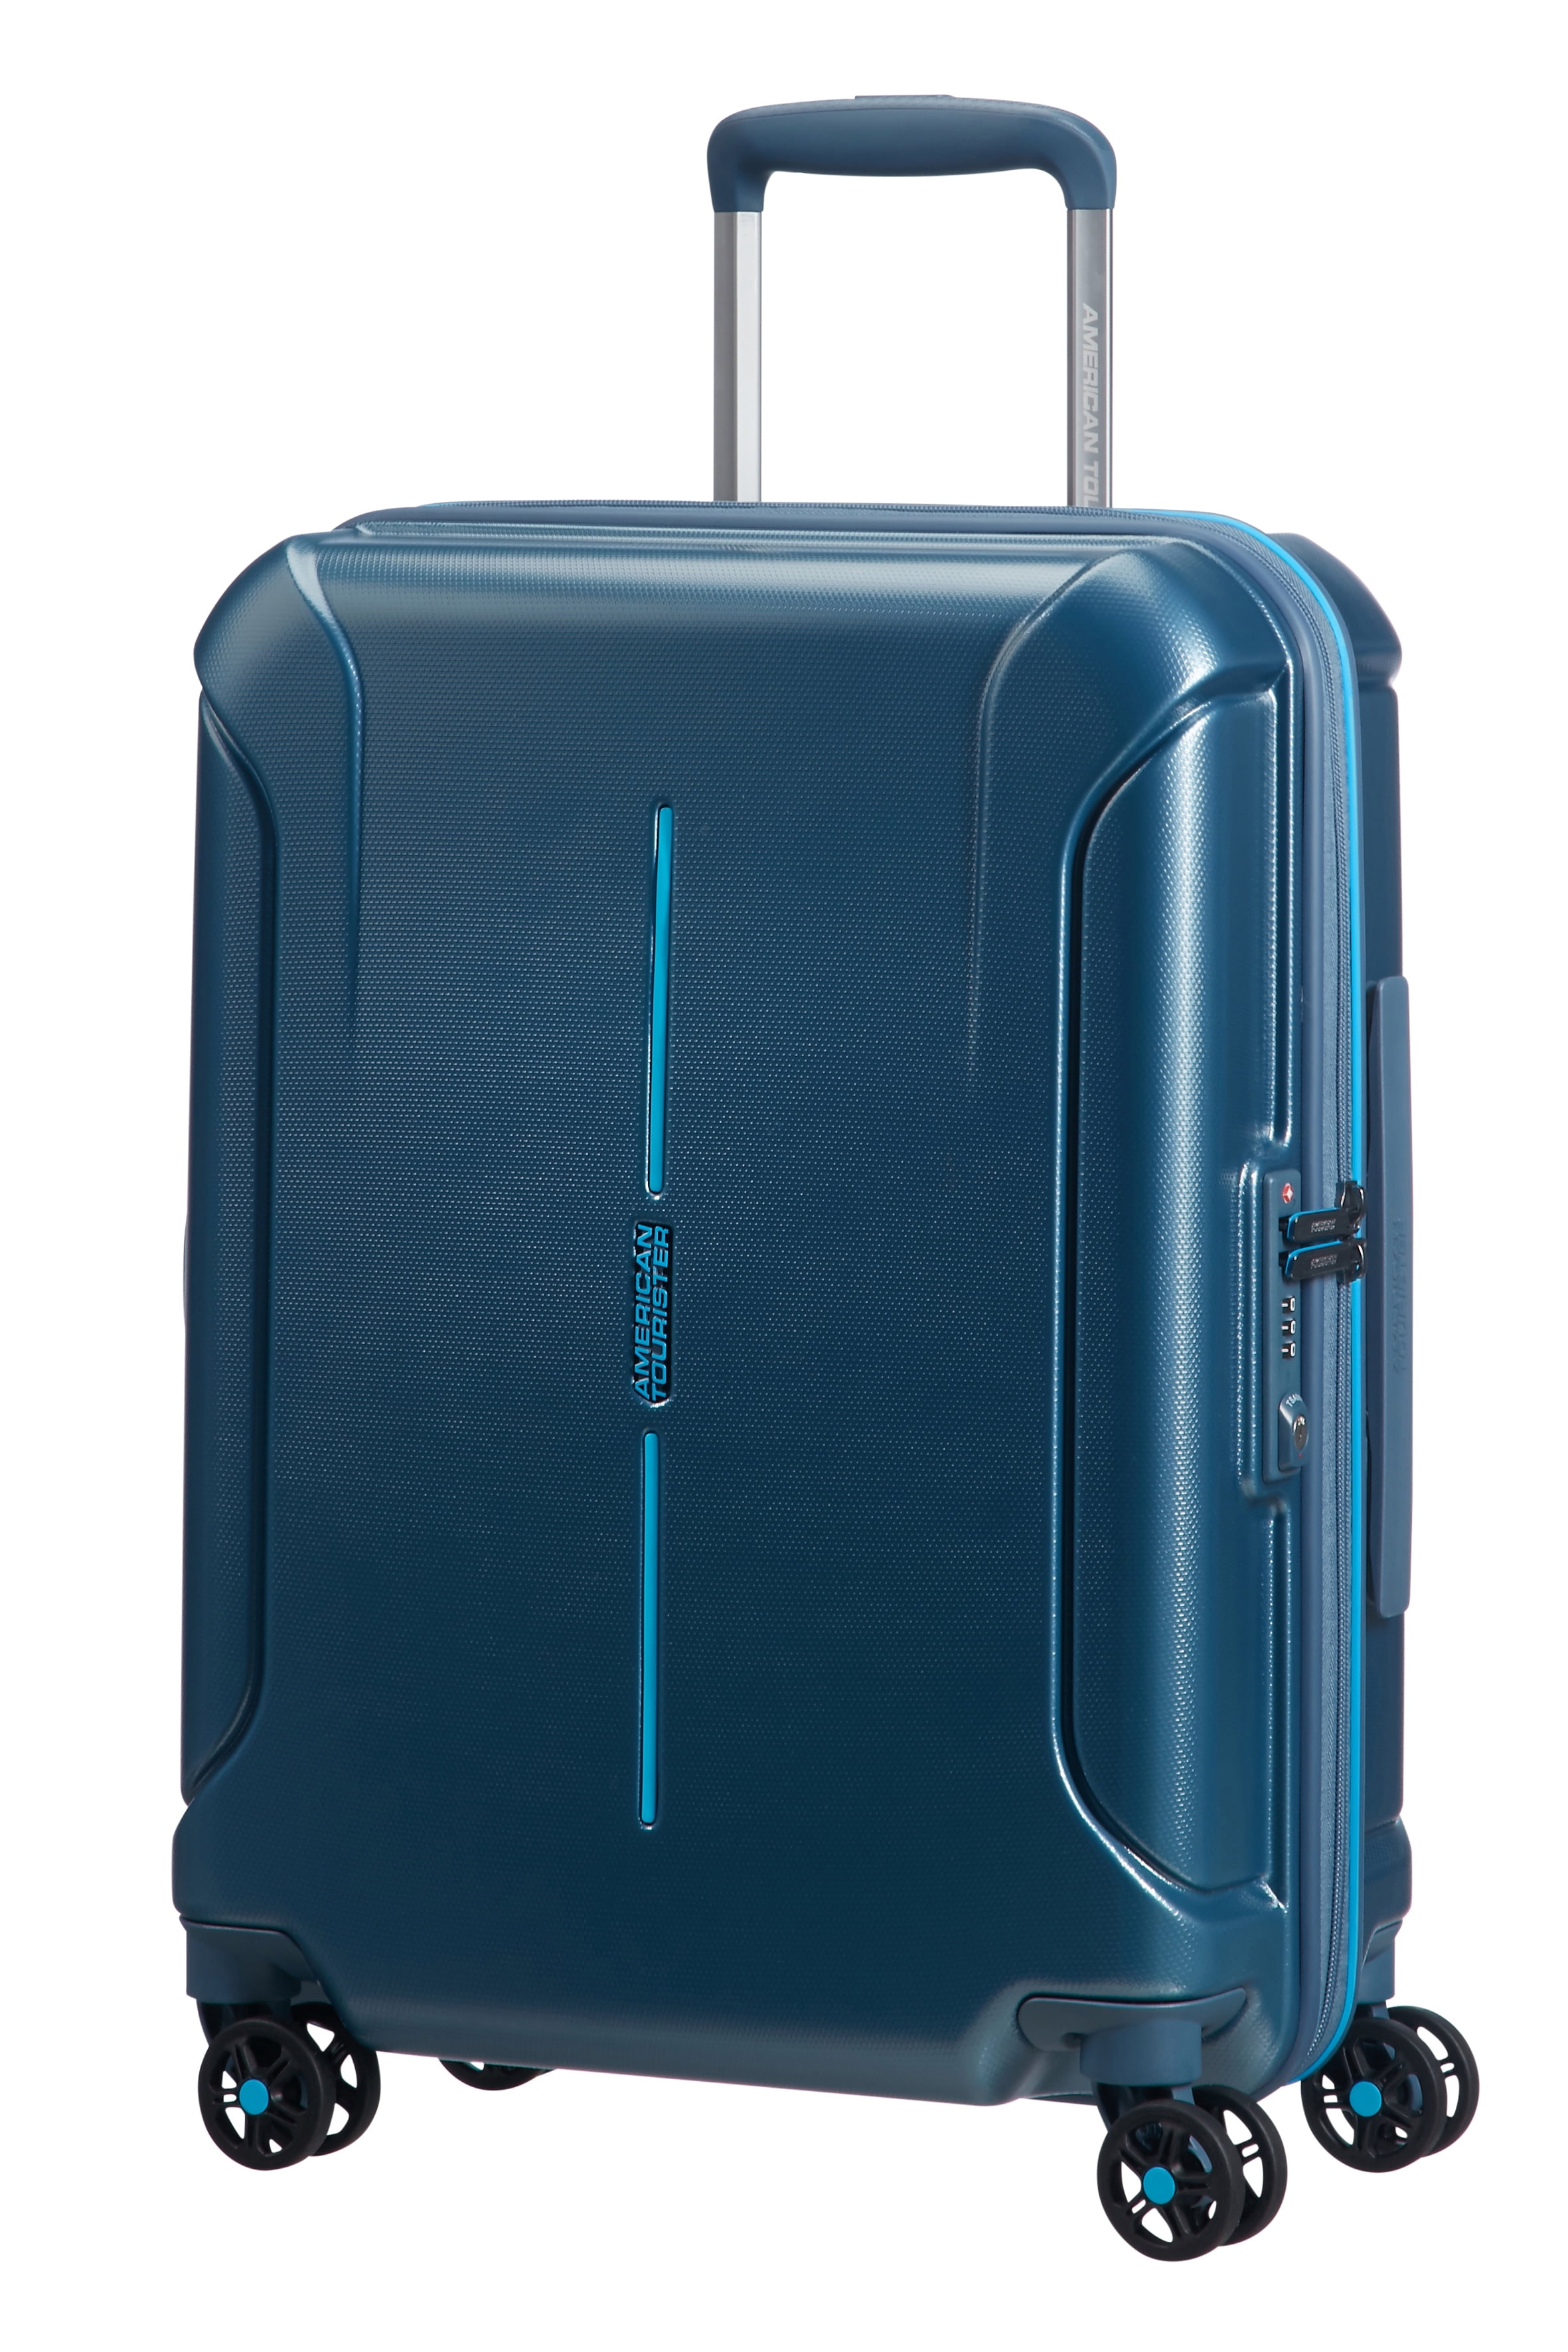 usa travel luggage